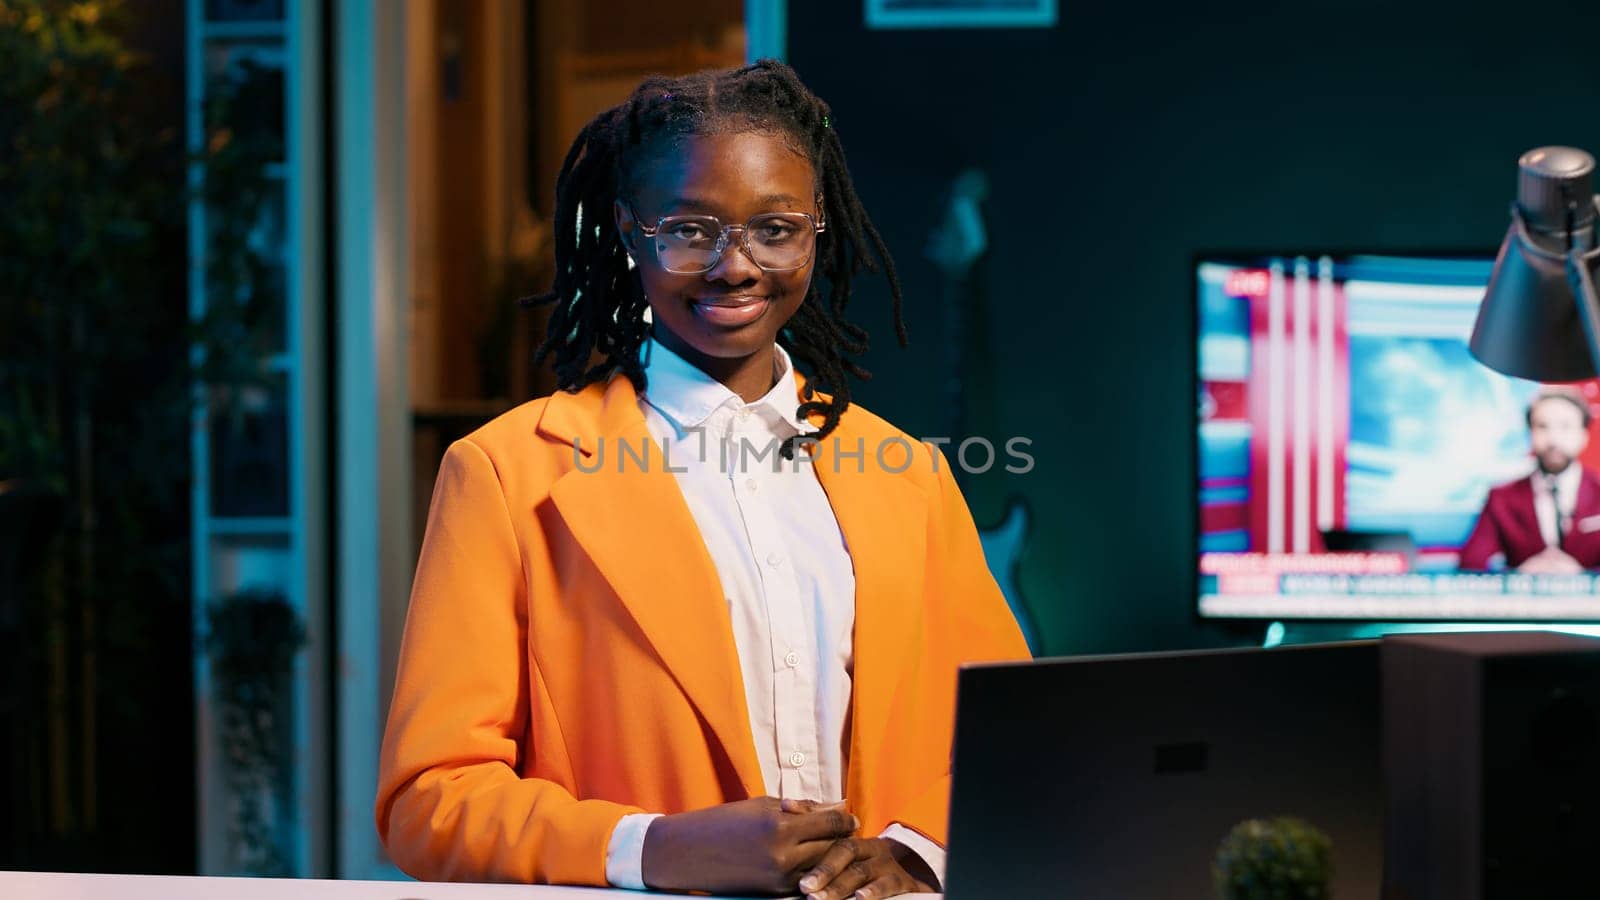 Portrait of university student sitting at desk using laptop to do school tasks by DCStudio